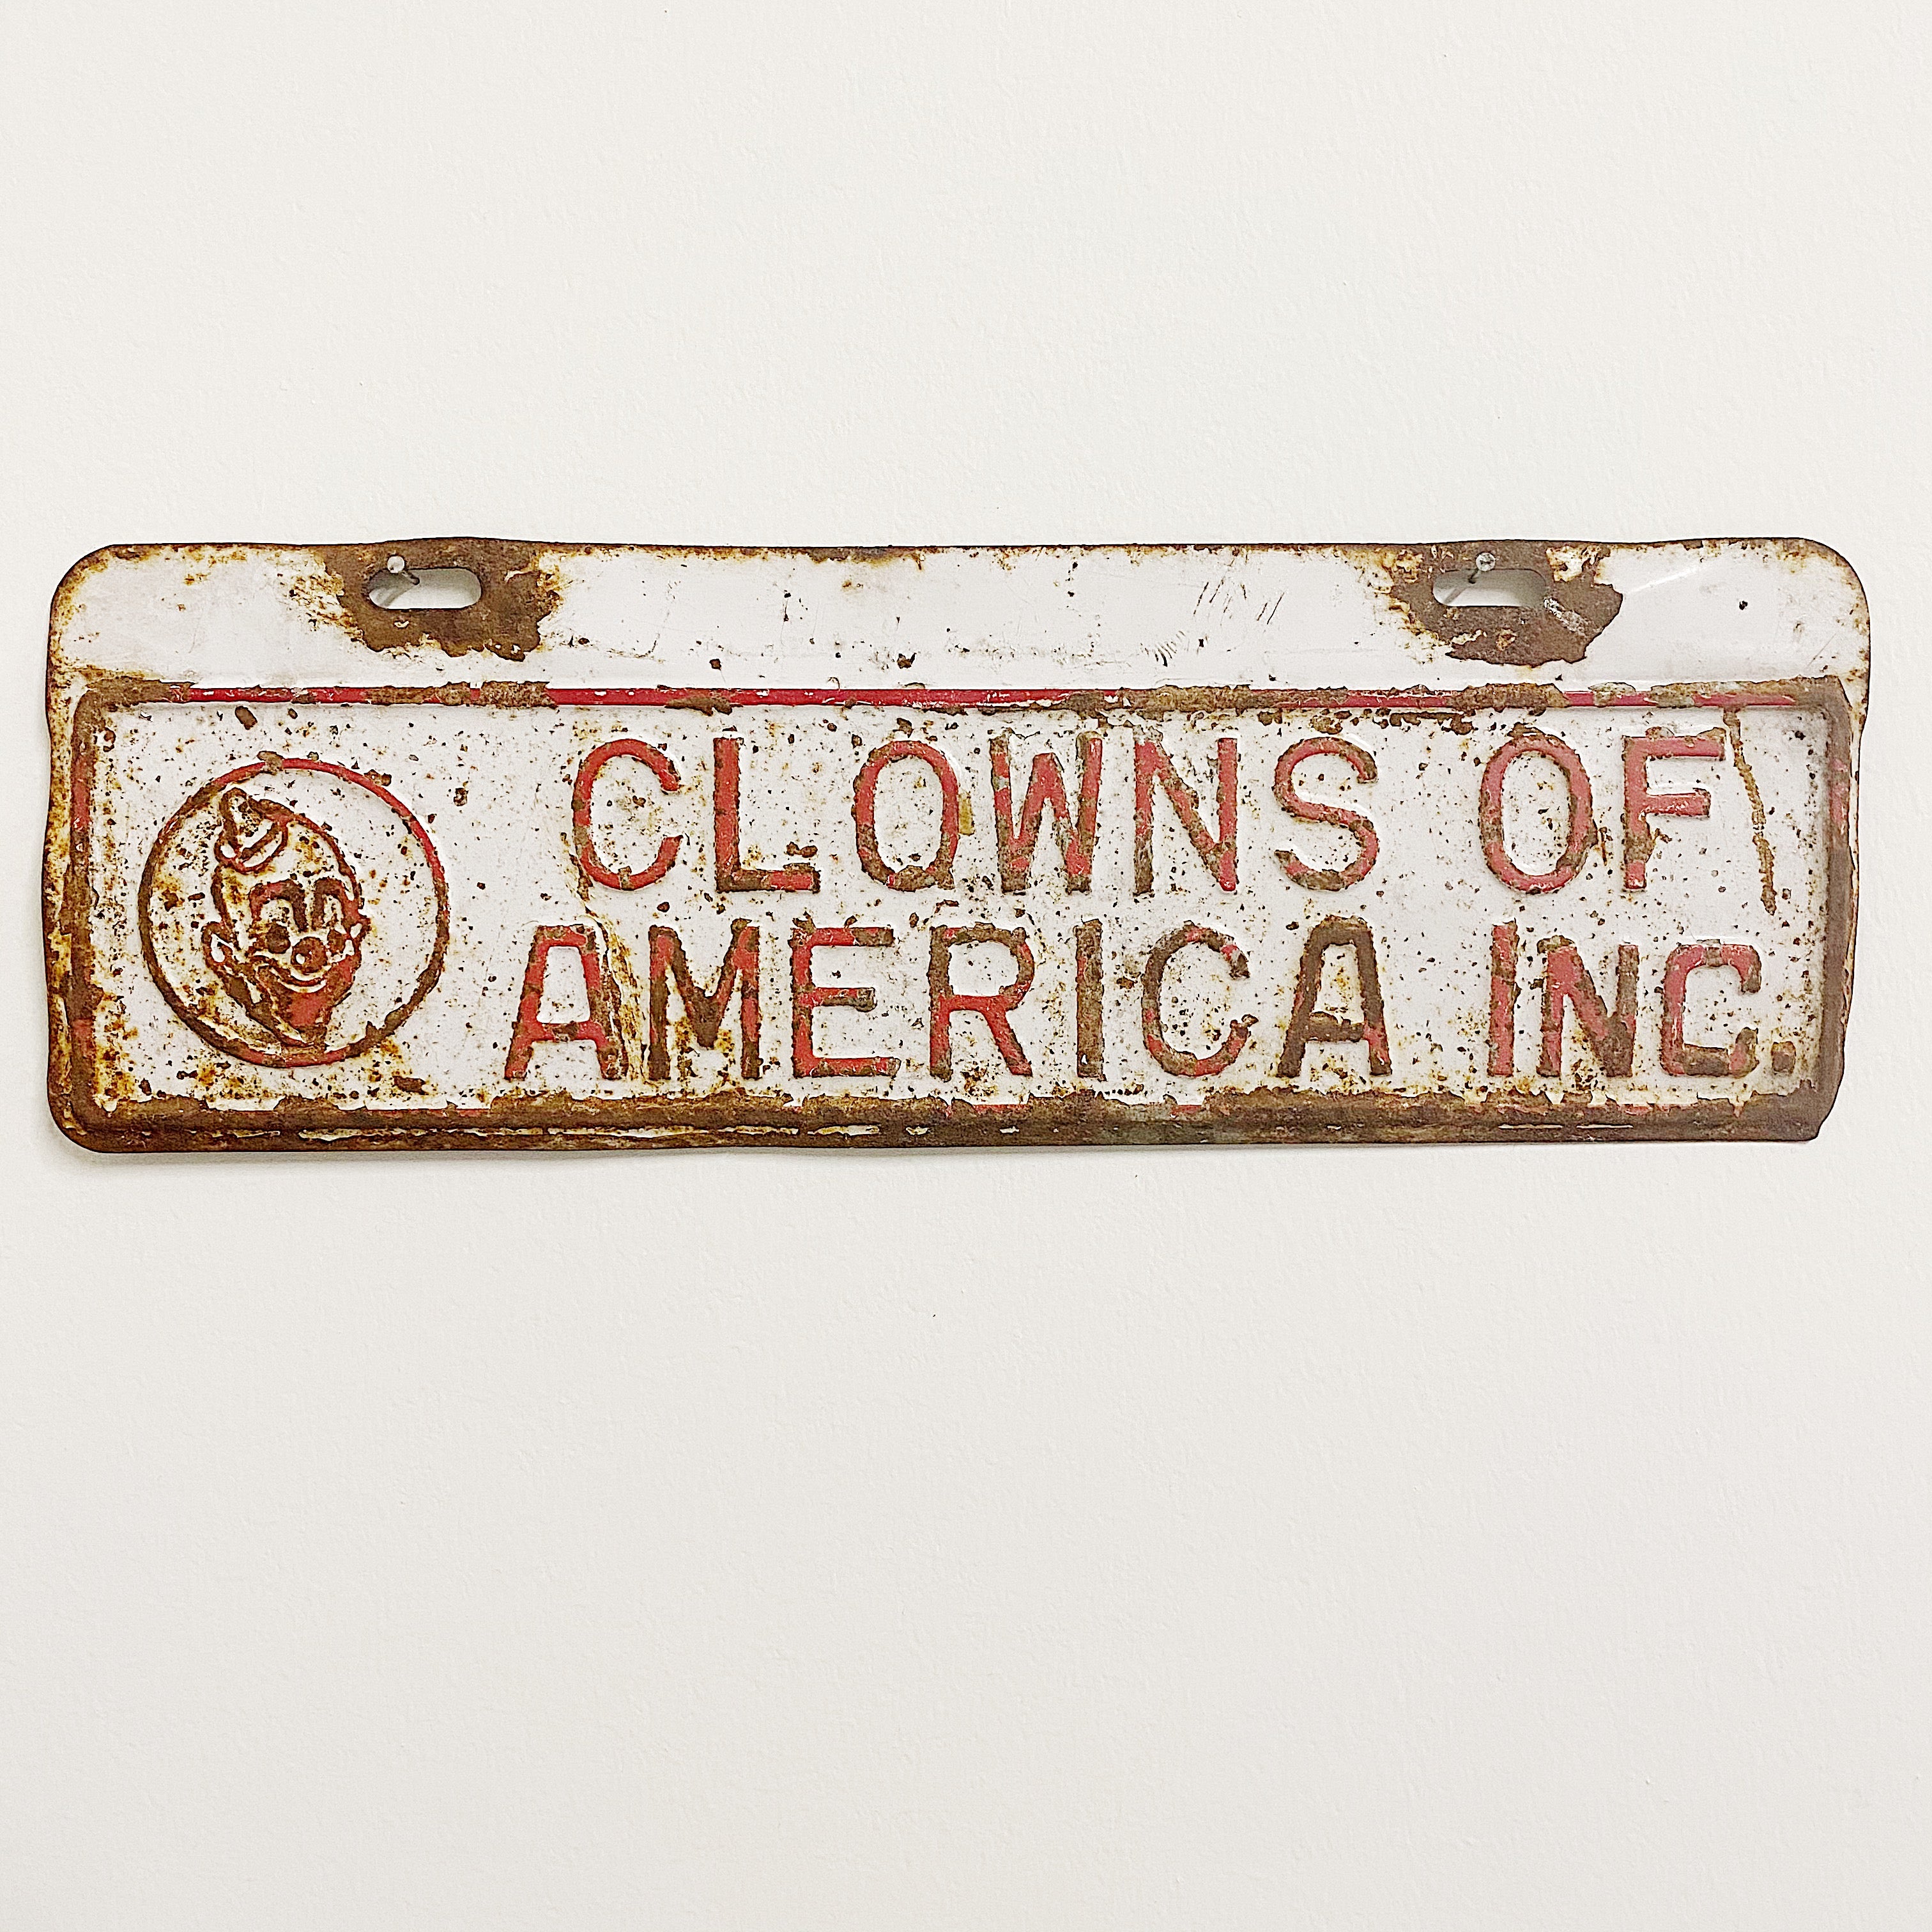 Vintage Clowns of America  License Plate | Rat Rod Culture